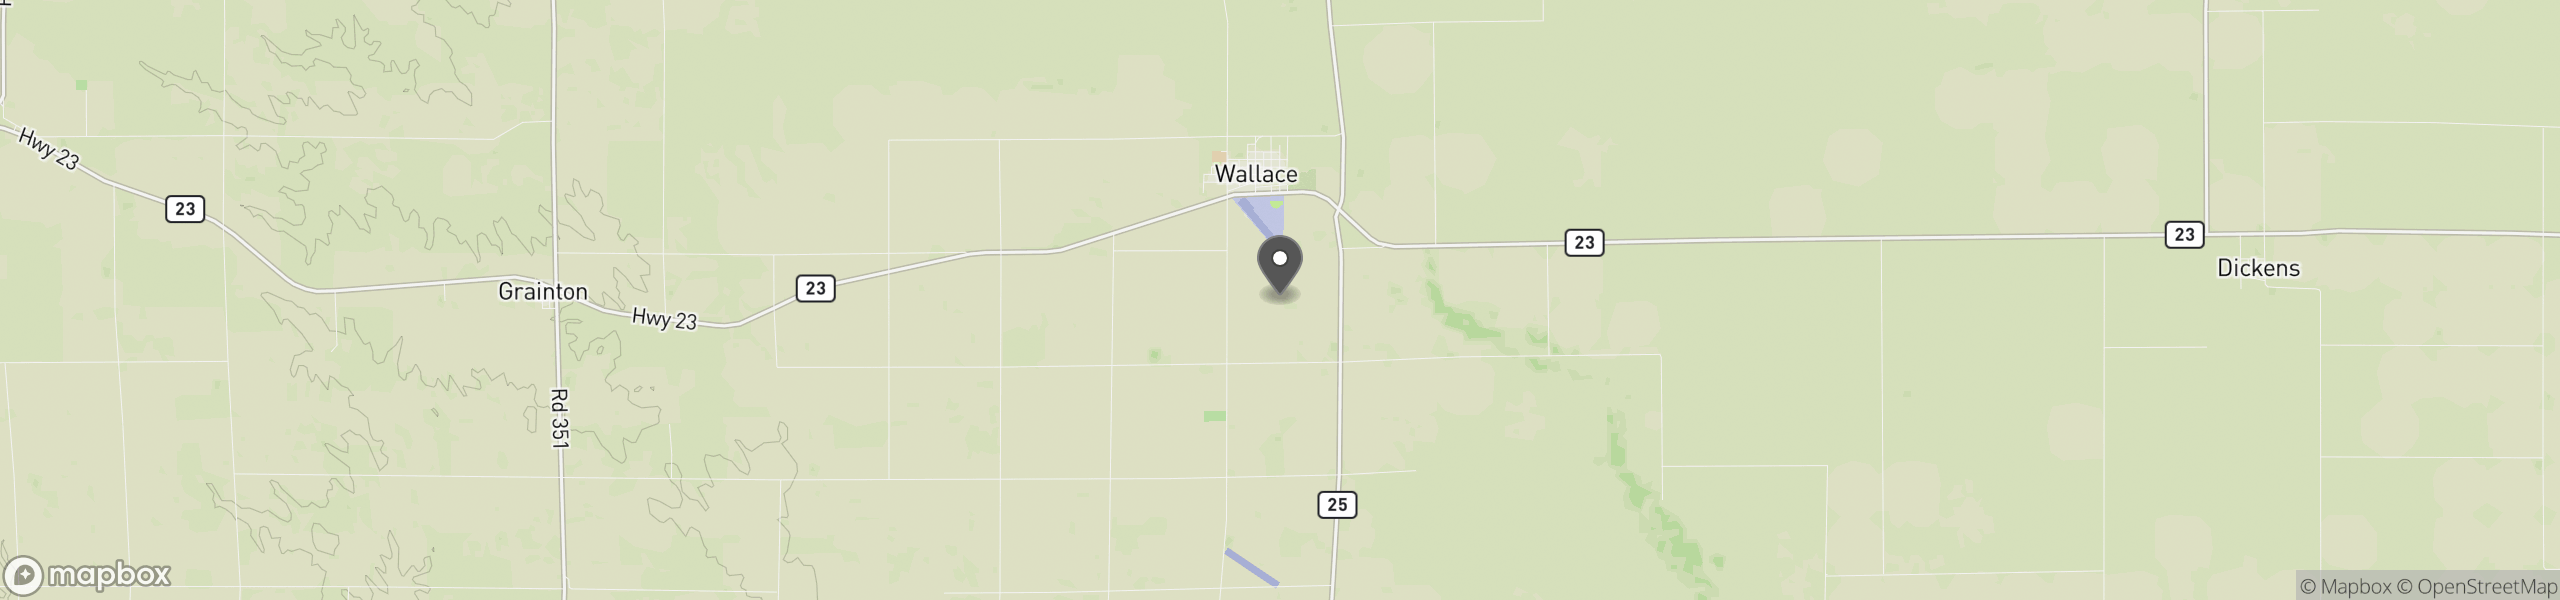 Wallace, NE 69169